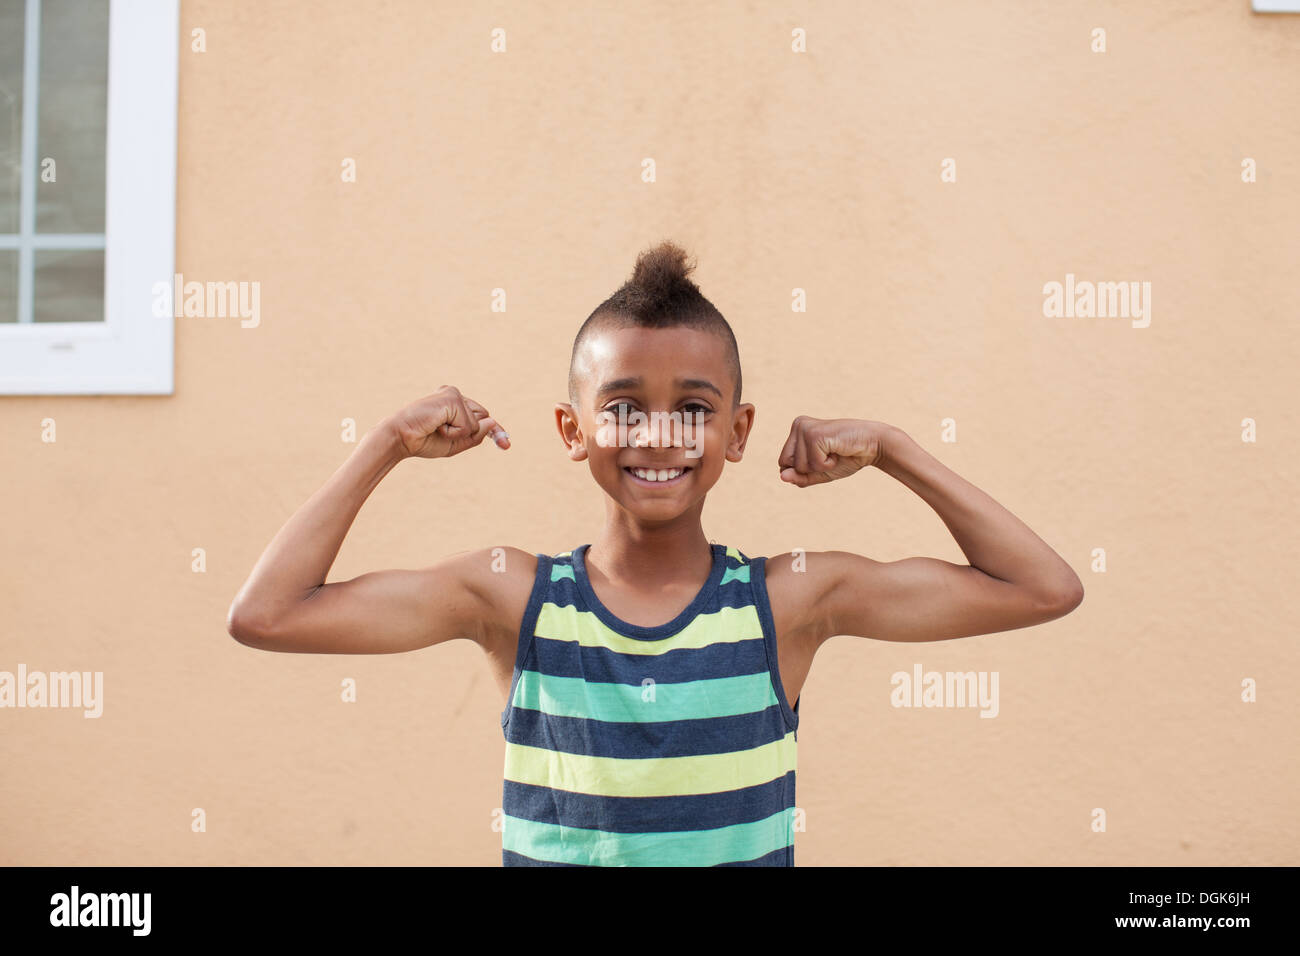 Portrait of boy flexing muscles Stock Photo